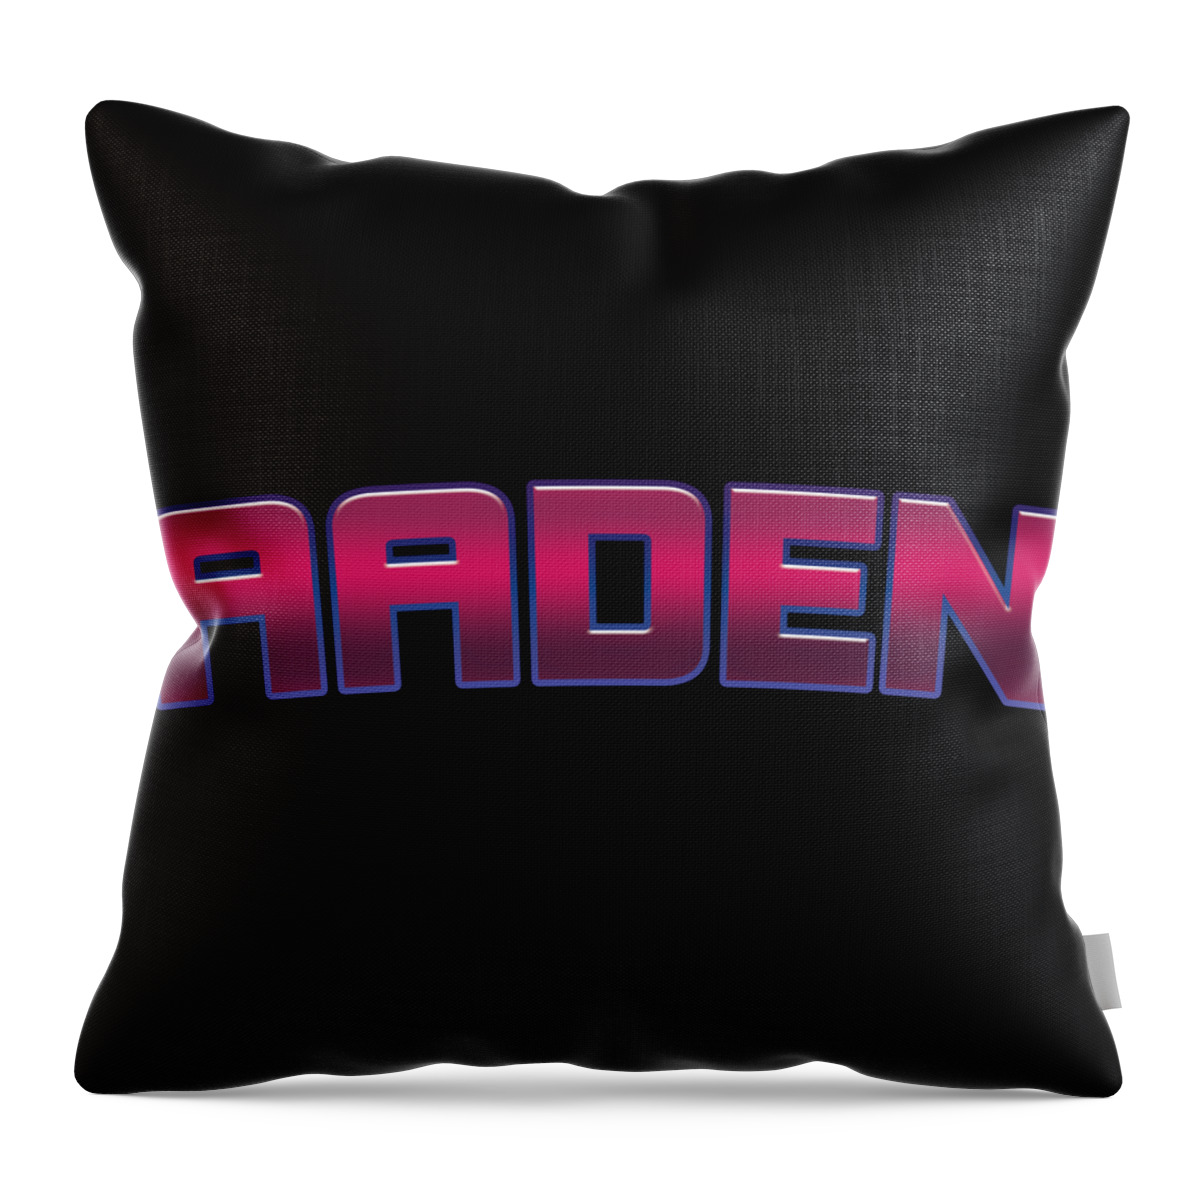 Aaden Throw Pillow featuring the digital art Aaden by TintoDesigns